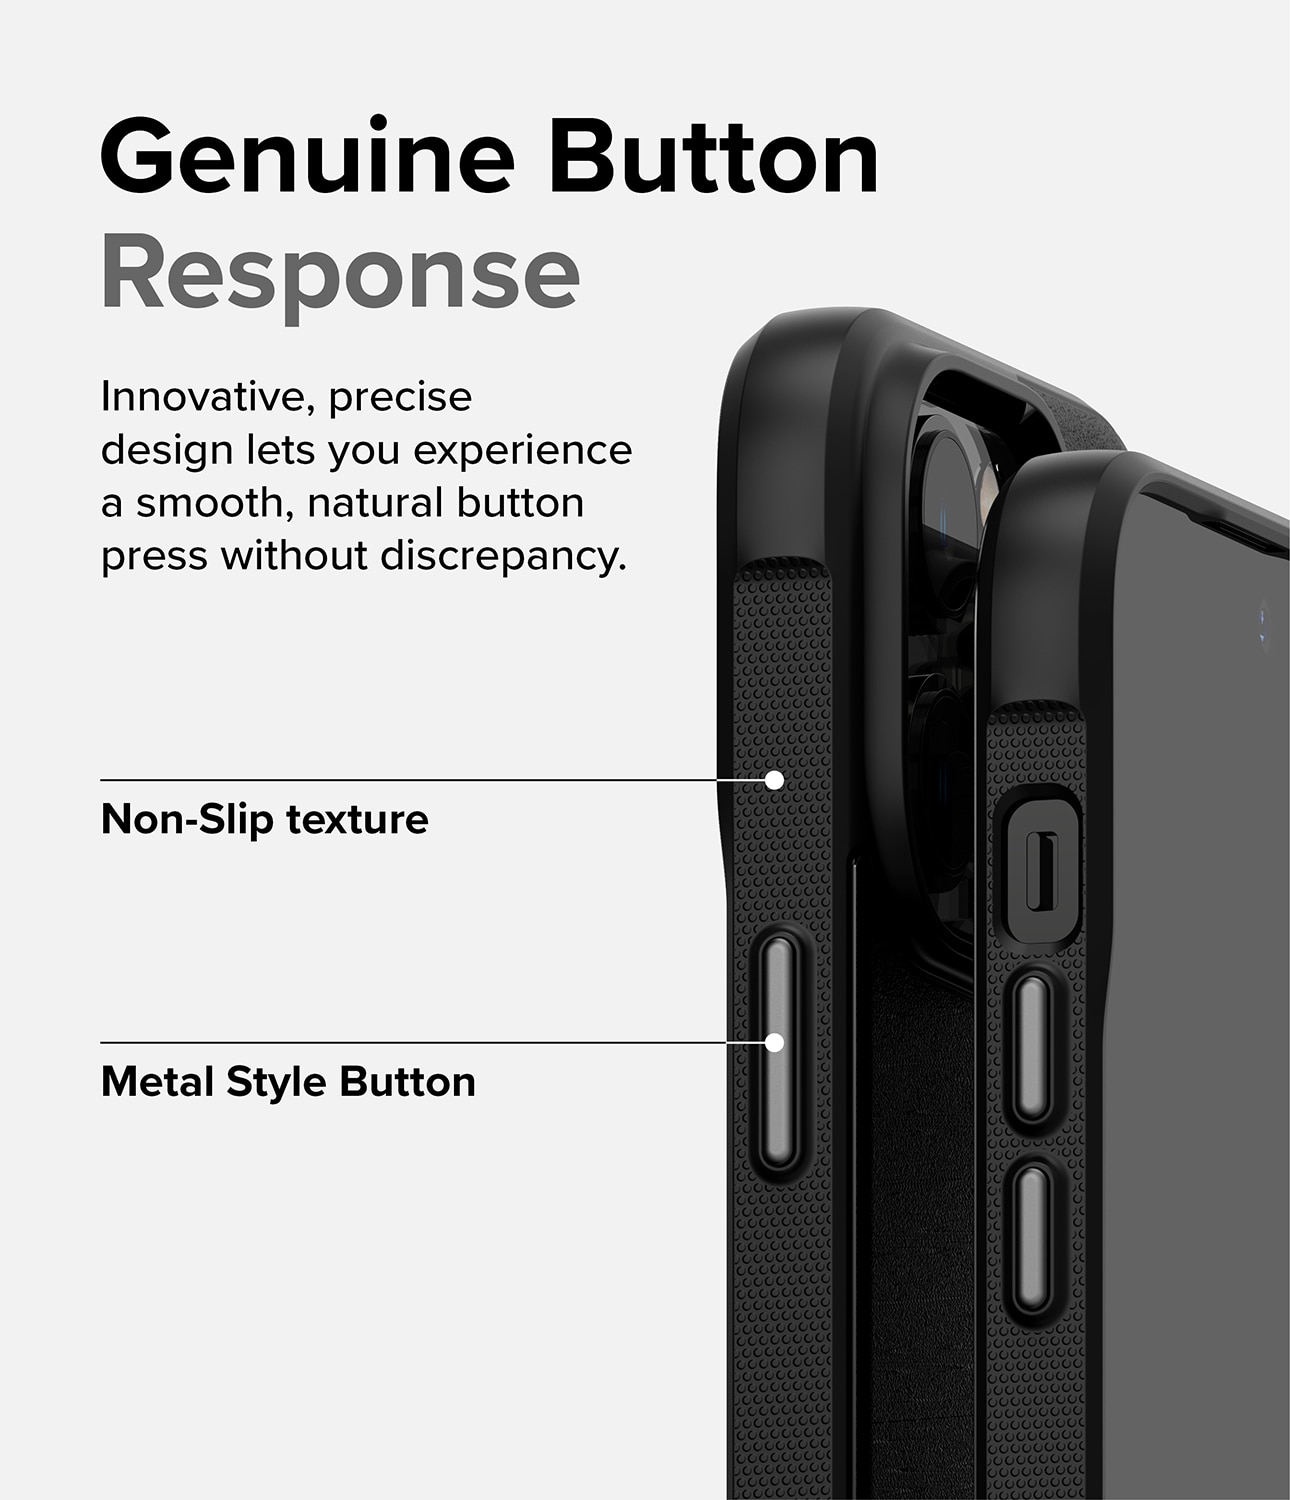 Onyx Case iPhone 14 Pro Zwart